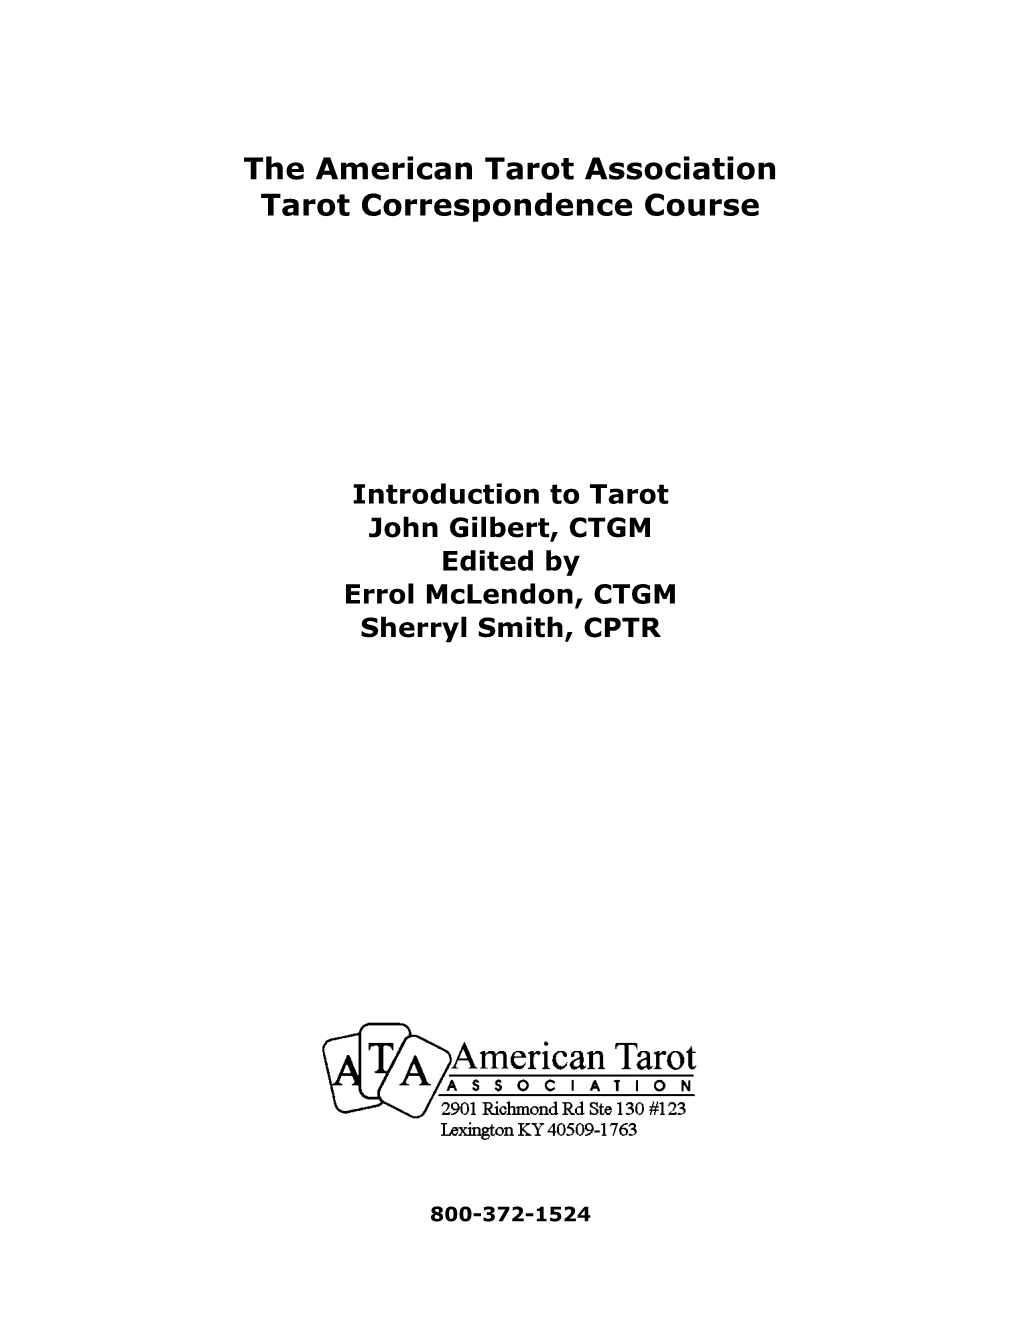 The American Tarot Association Tarot Correspondence Course